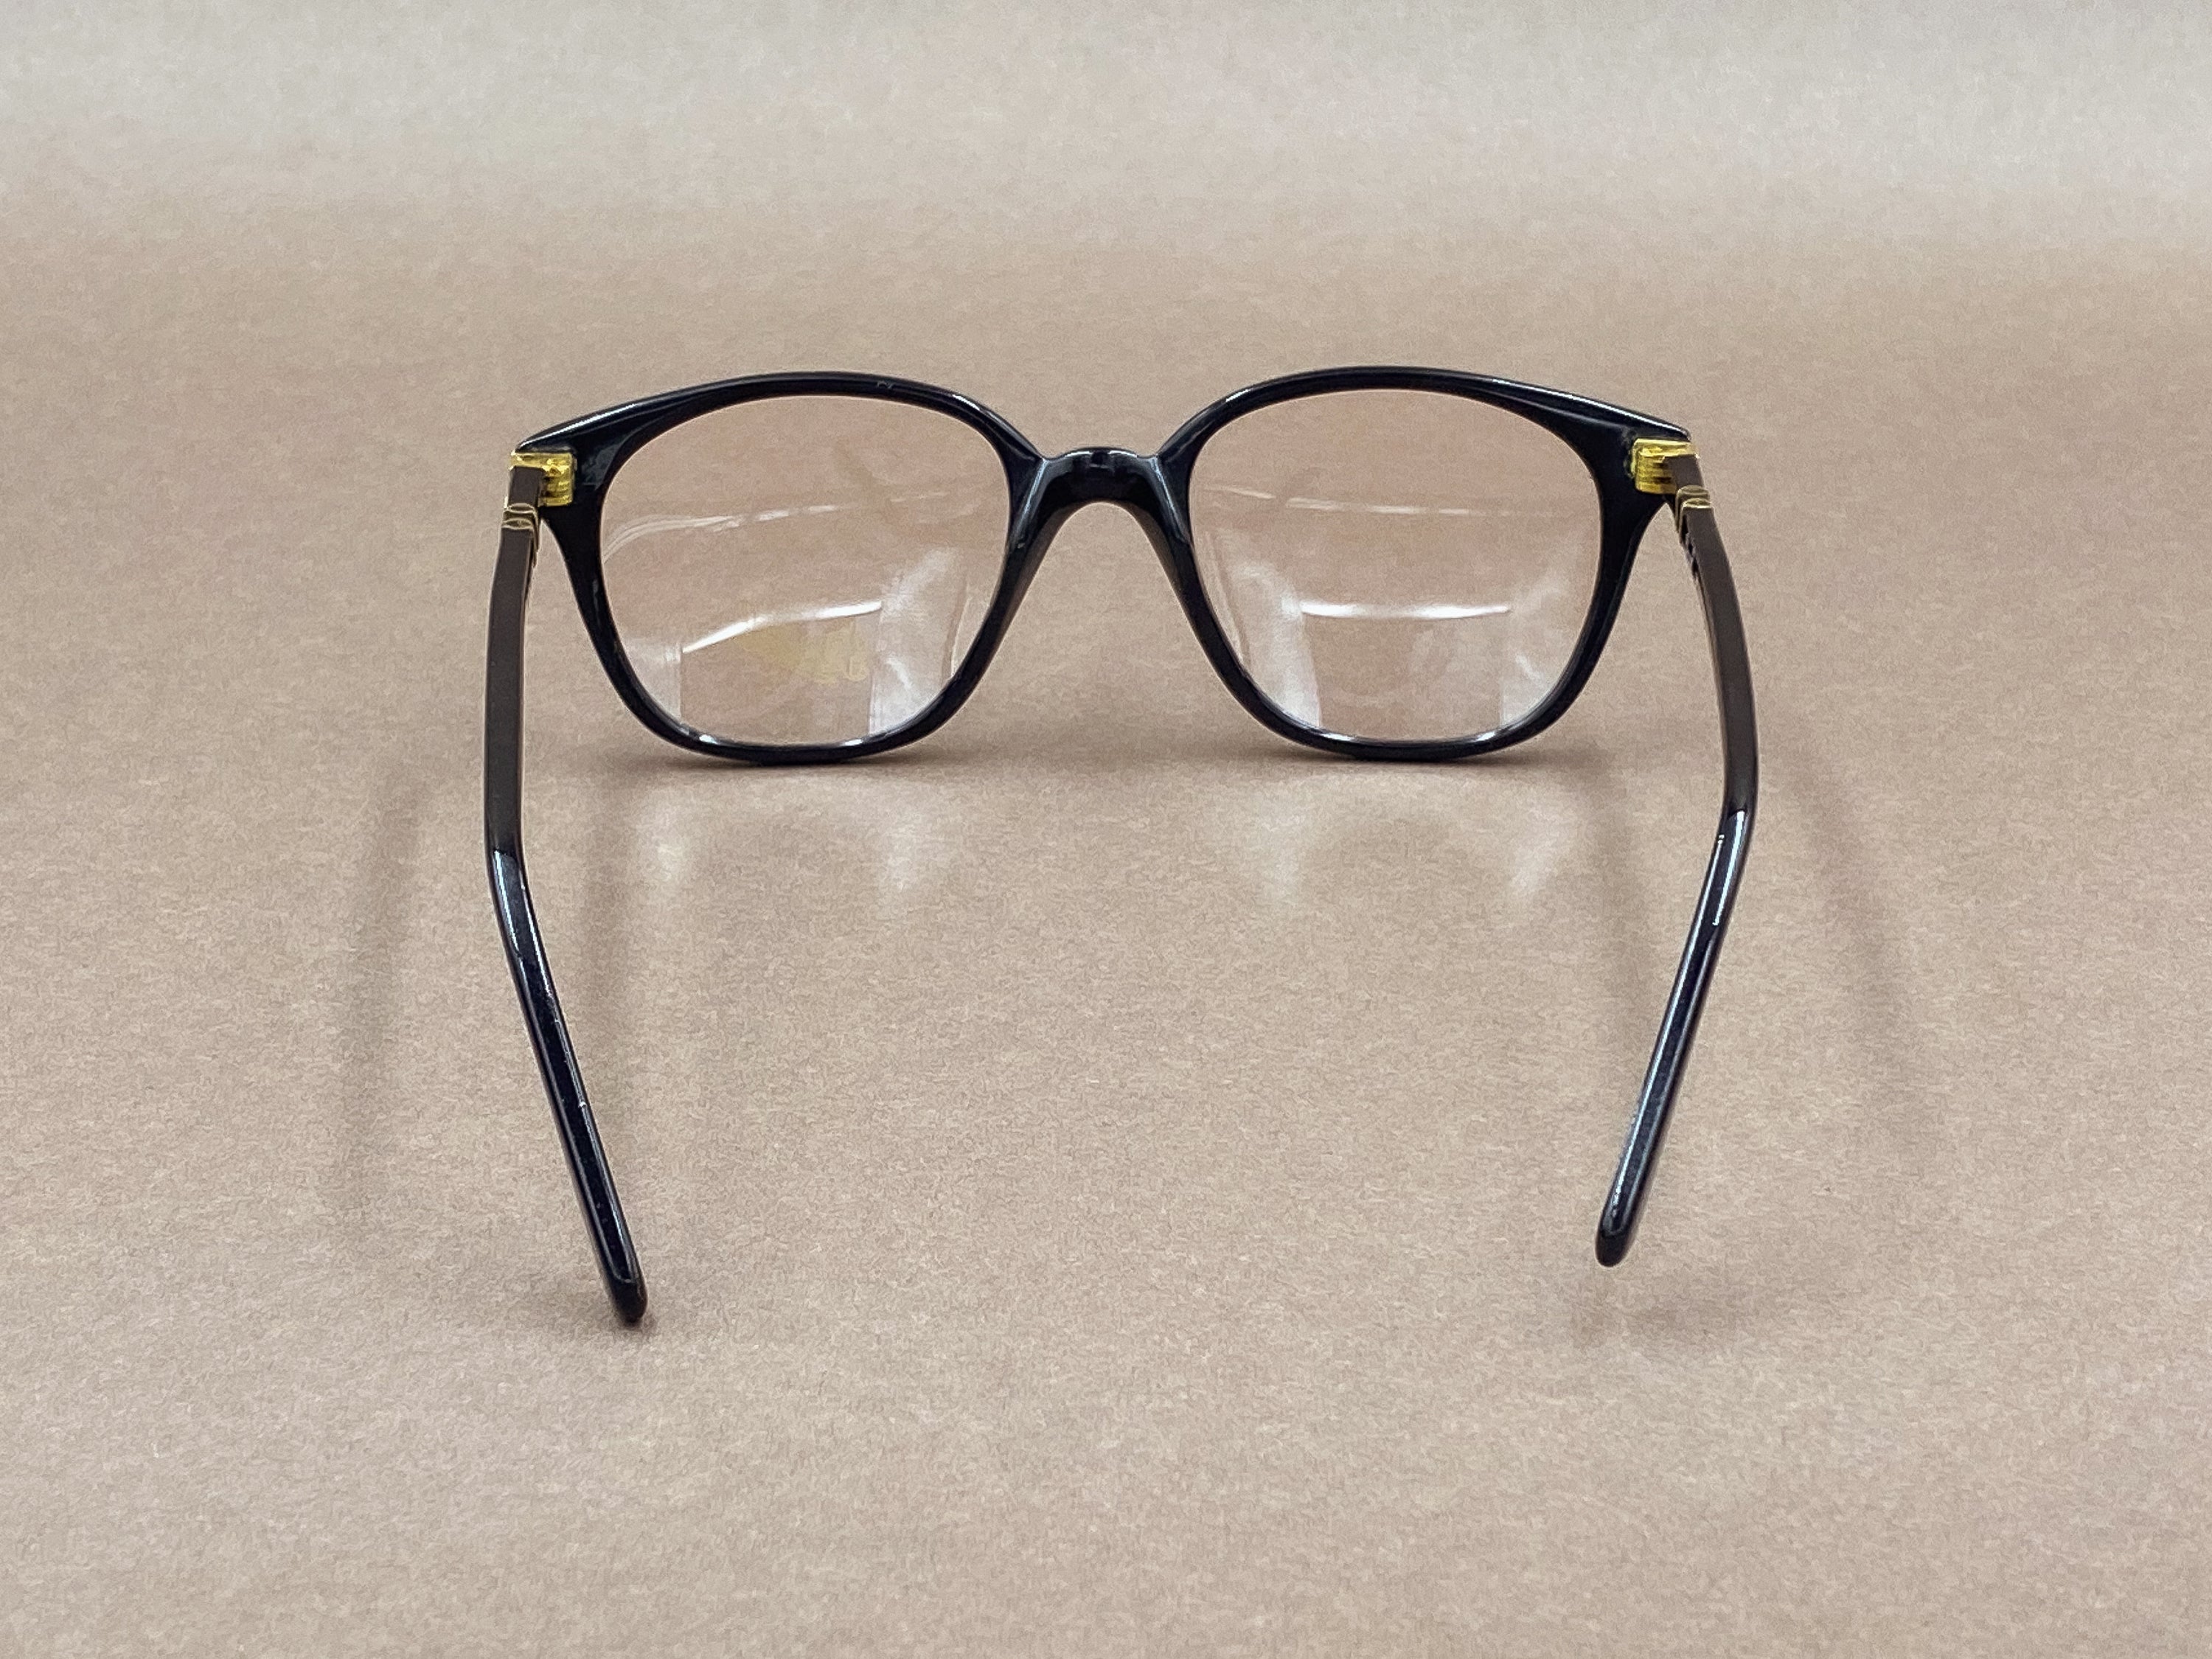 Persol Ratti 301 eyeglasses